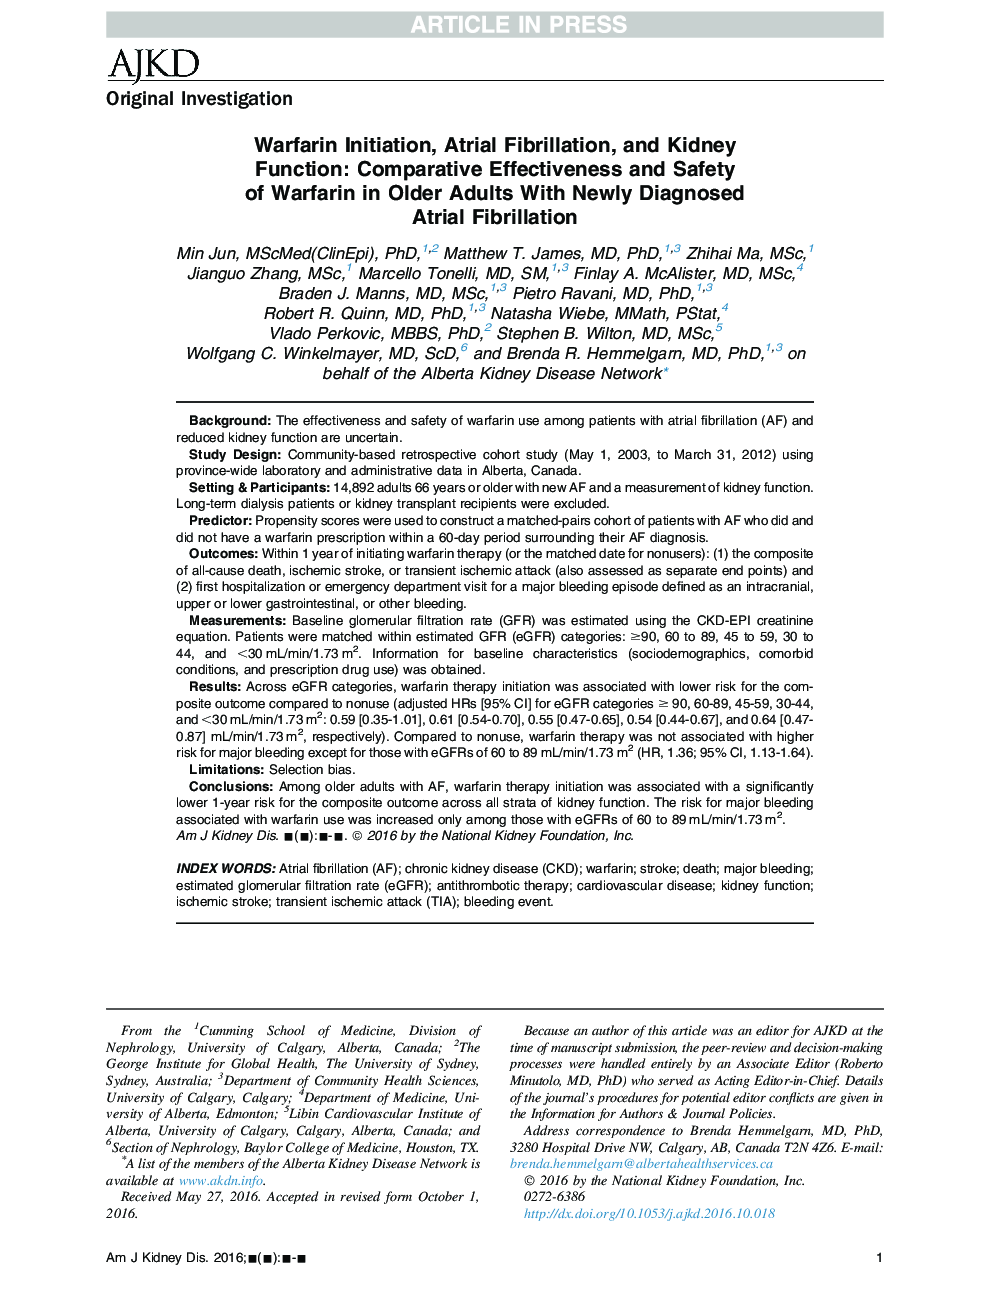 Warfarin Initiation, Atrial Fibrillation, and Kidney Function:Â Comparative Effectiveness and Safety ofÂ WarfarinÂ inÂ OlderÂ AdultsÂ With Newly Diagnosed AtrialÂ Fibrillation